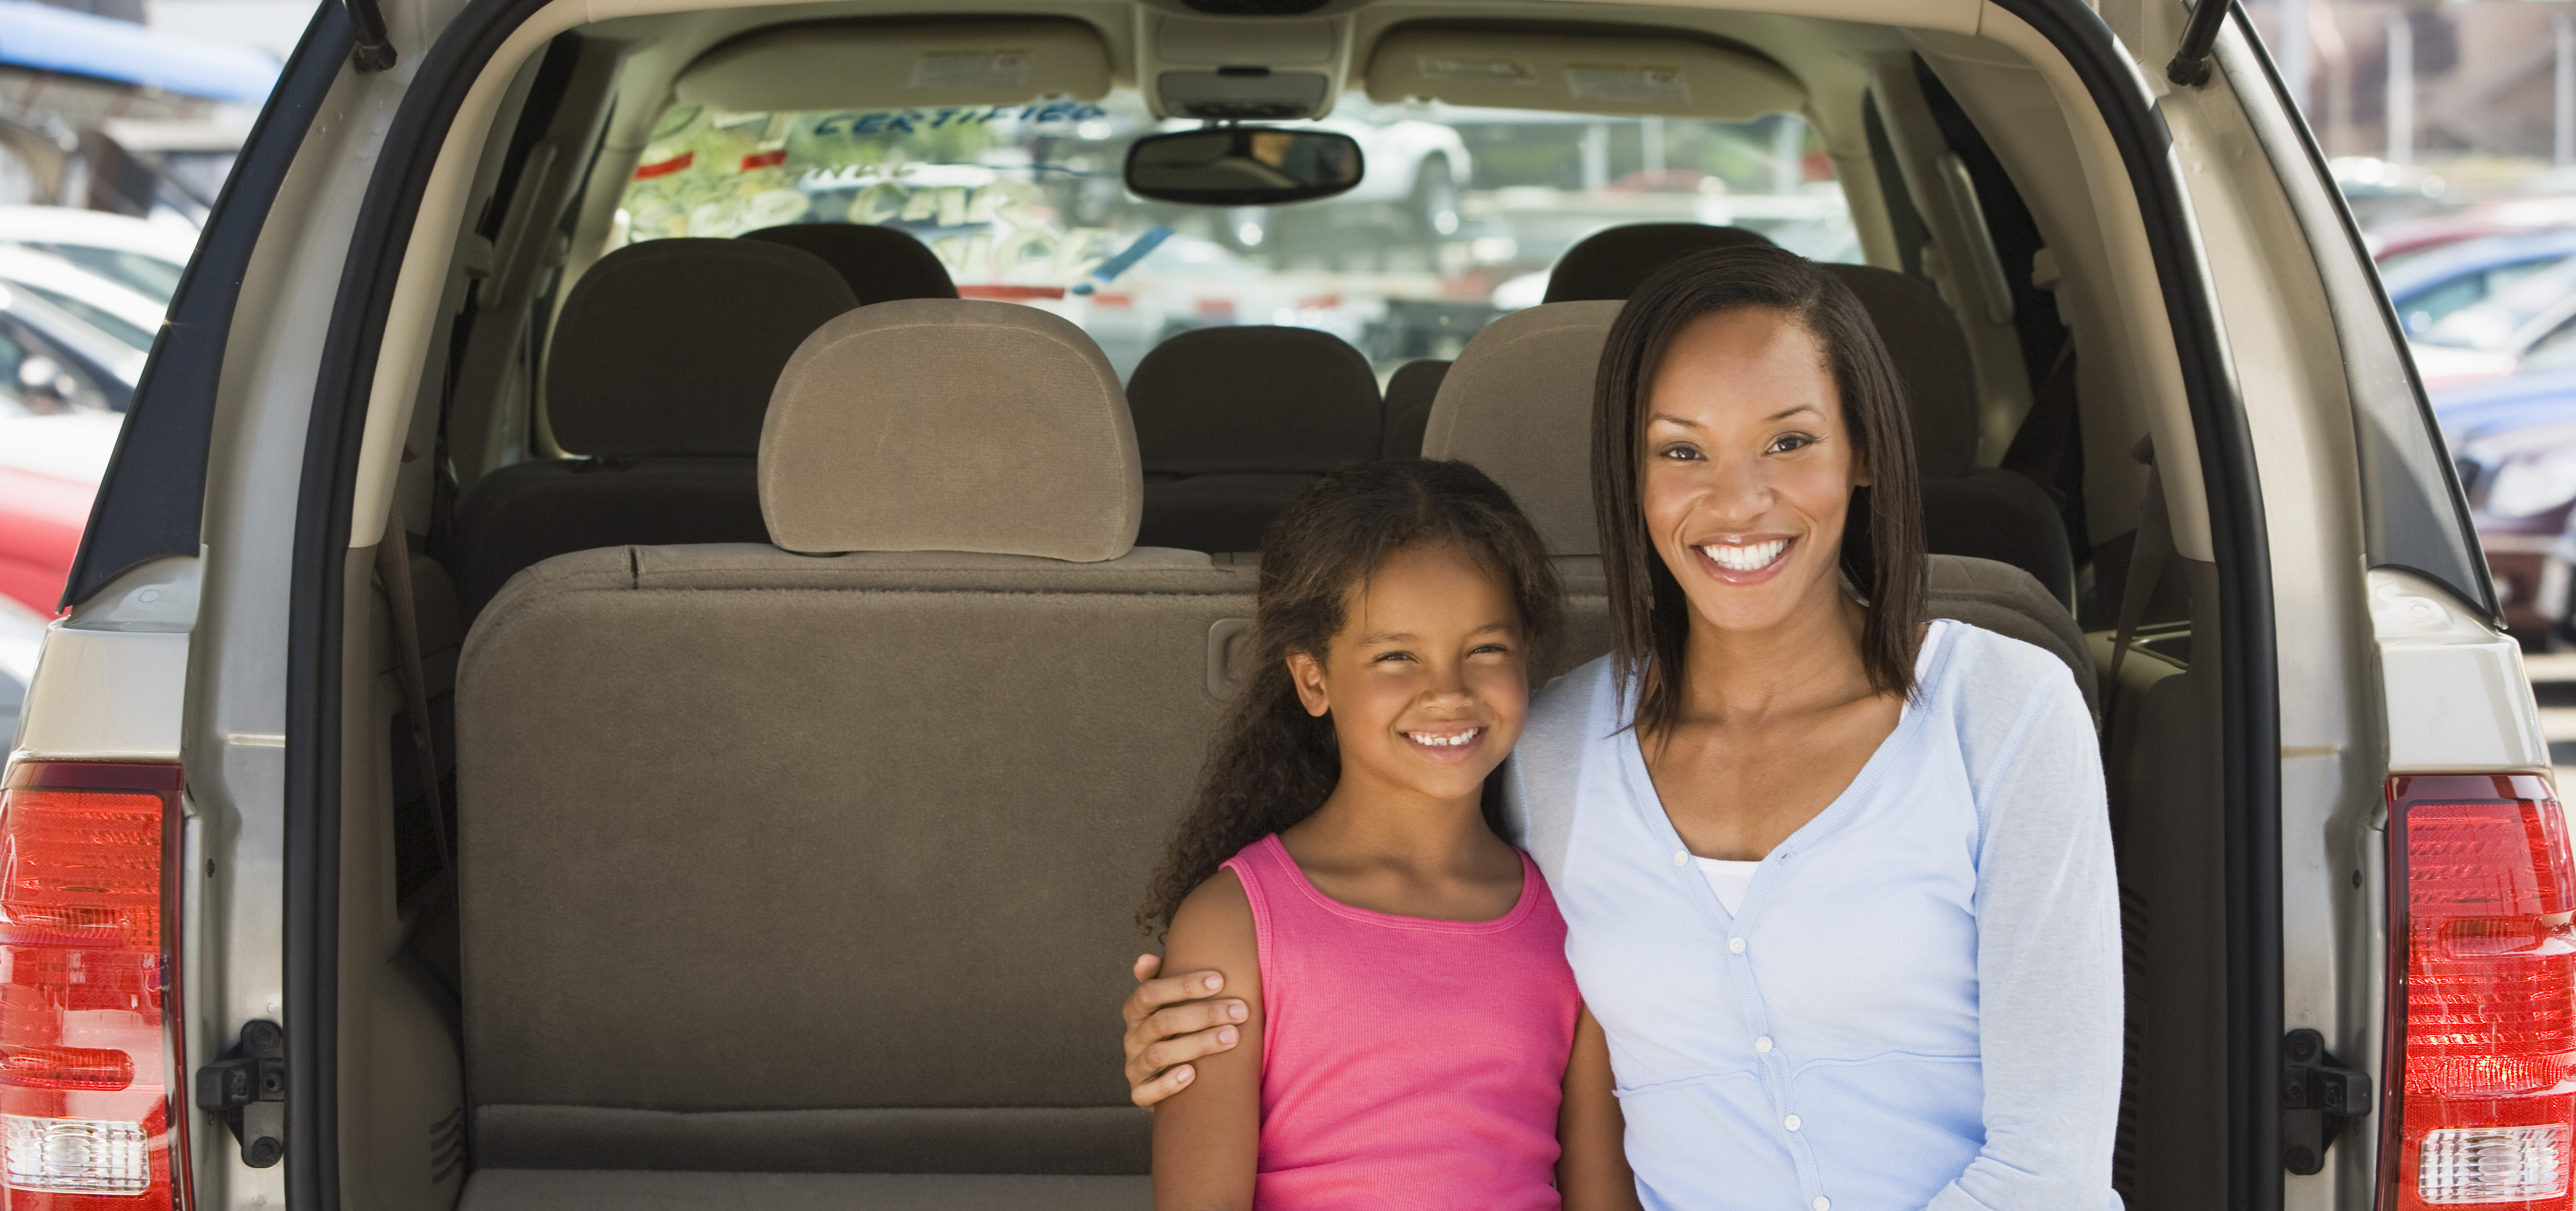 Family Service Transportation - A Second Chance, Inc.